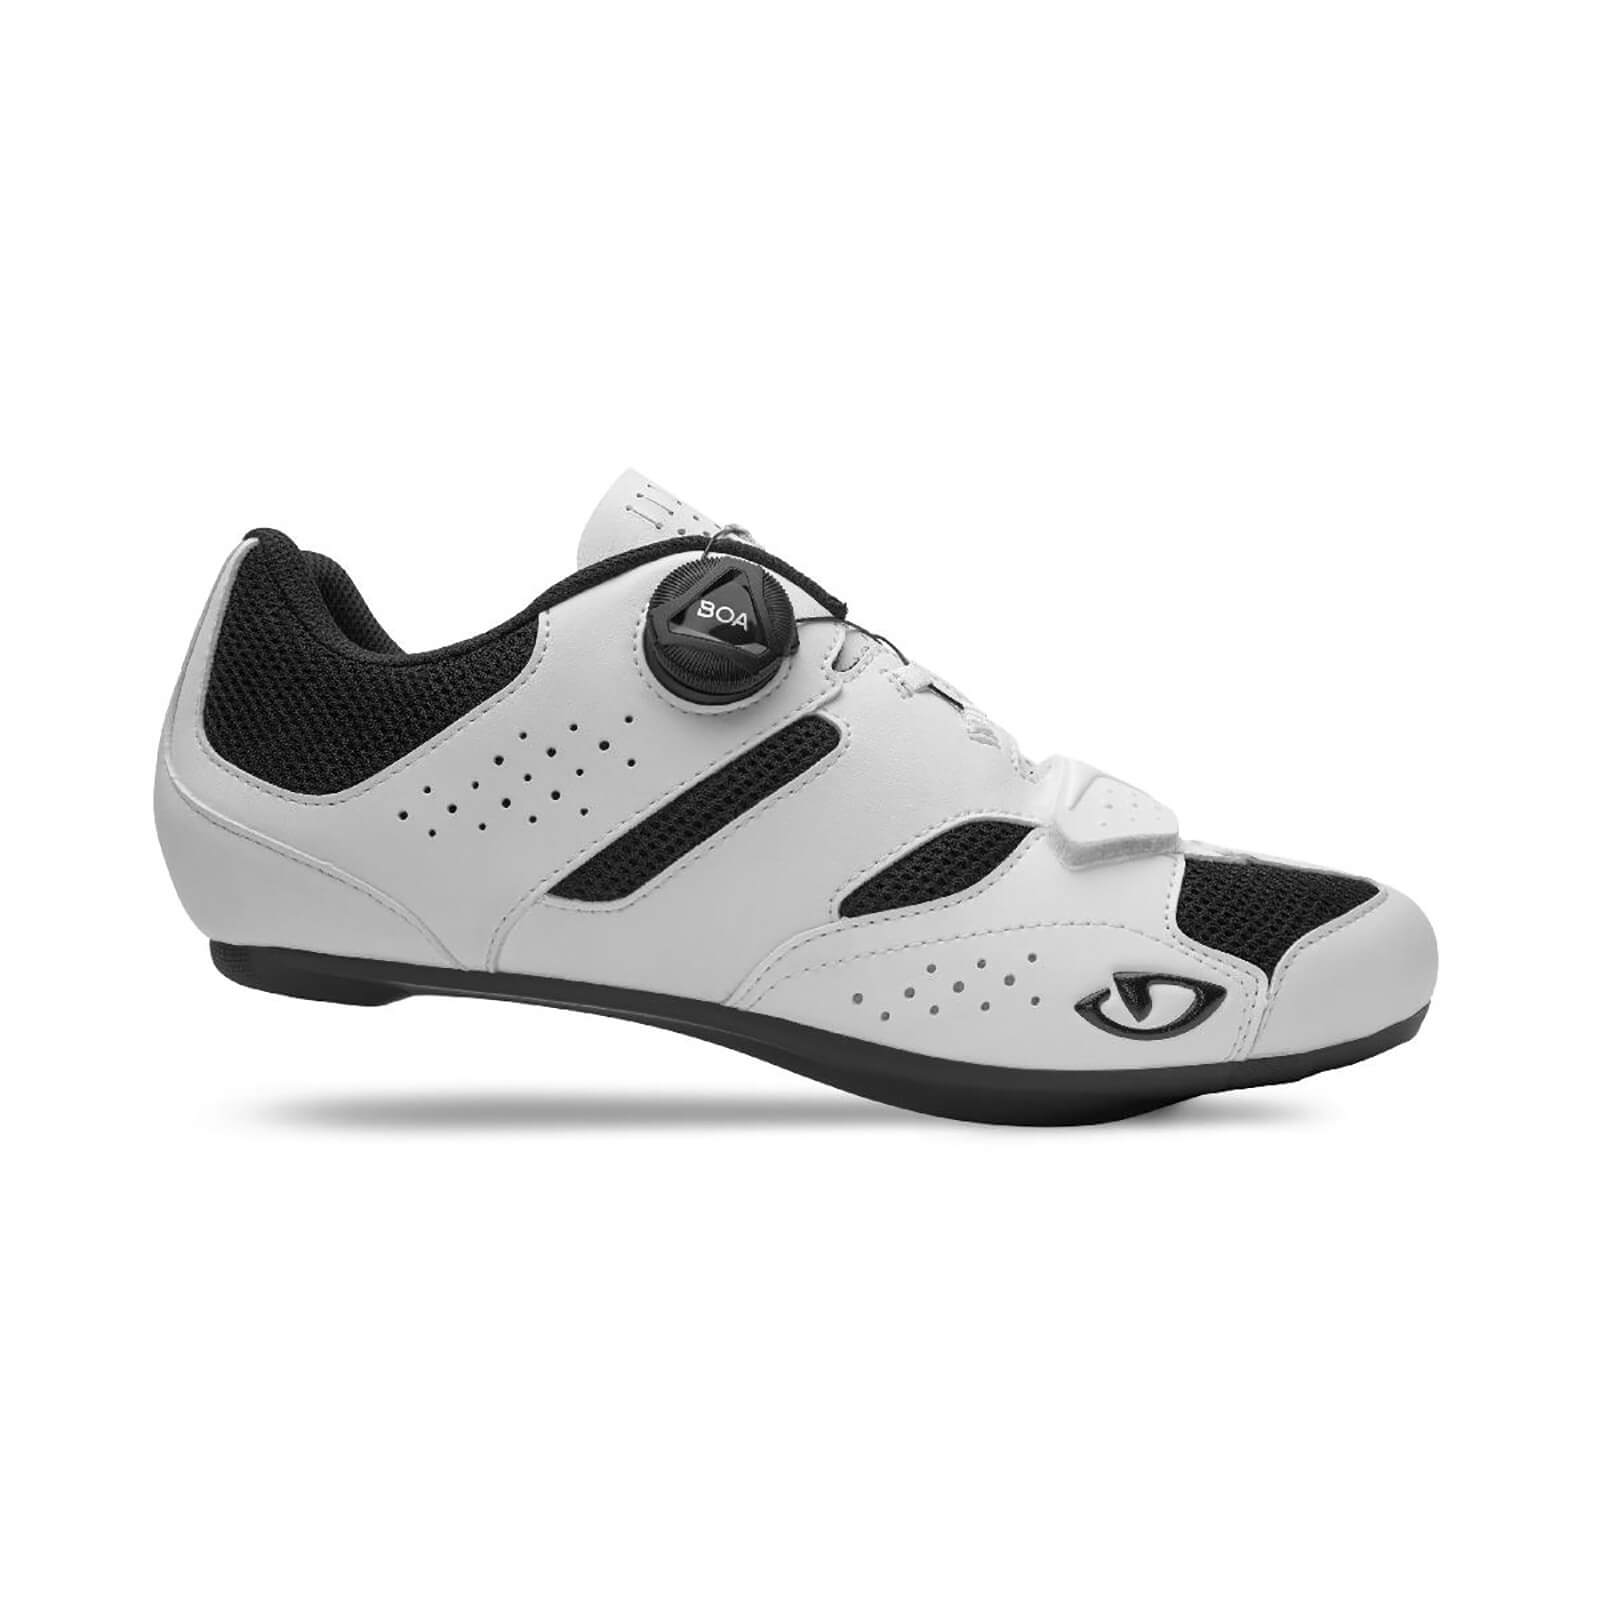 Giro Savix II Road Shoes - EU 42 - White